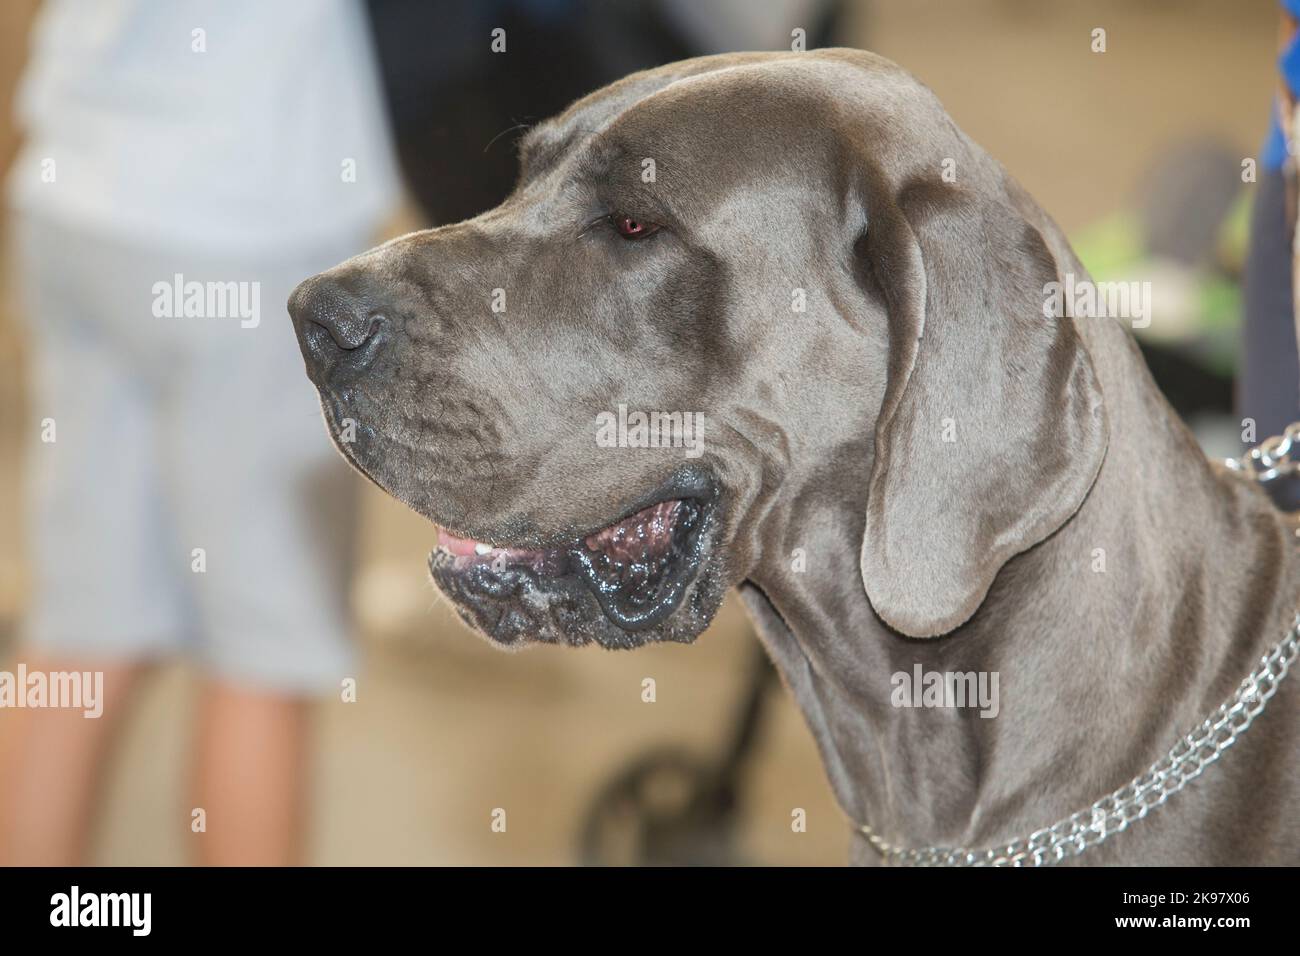 Blue Great Dane dog portrait. Head detail Stock Photo